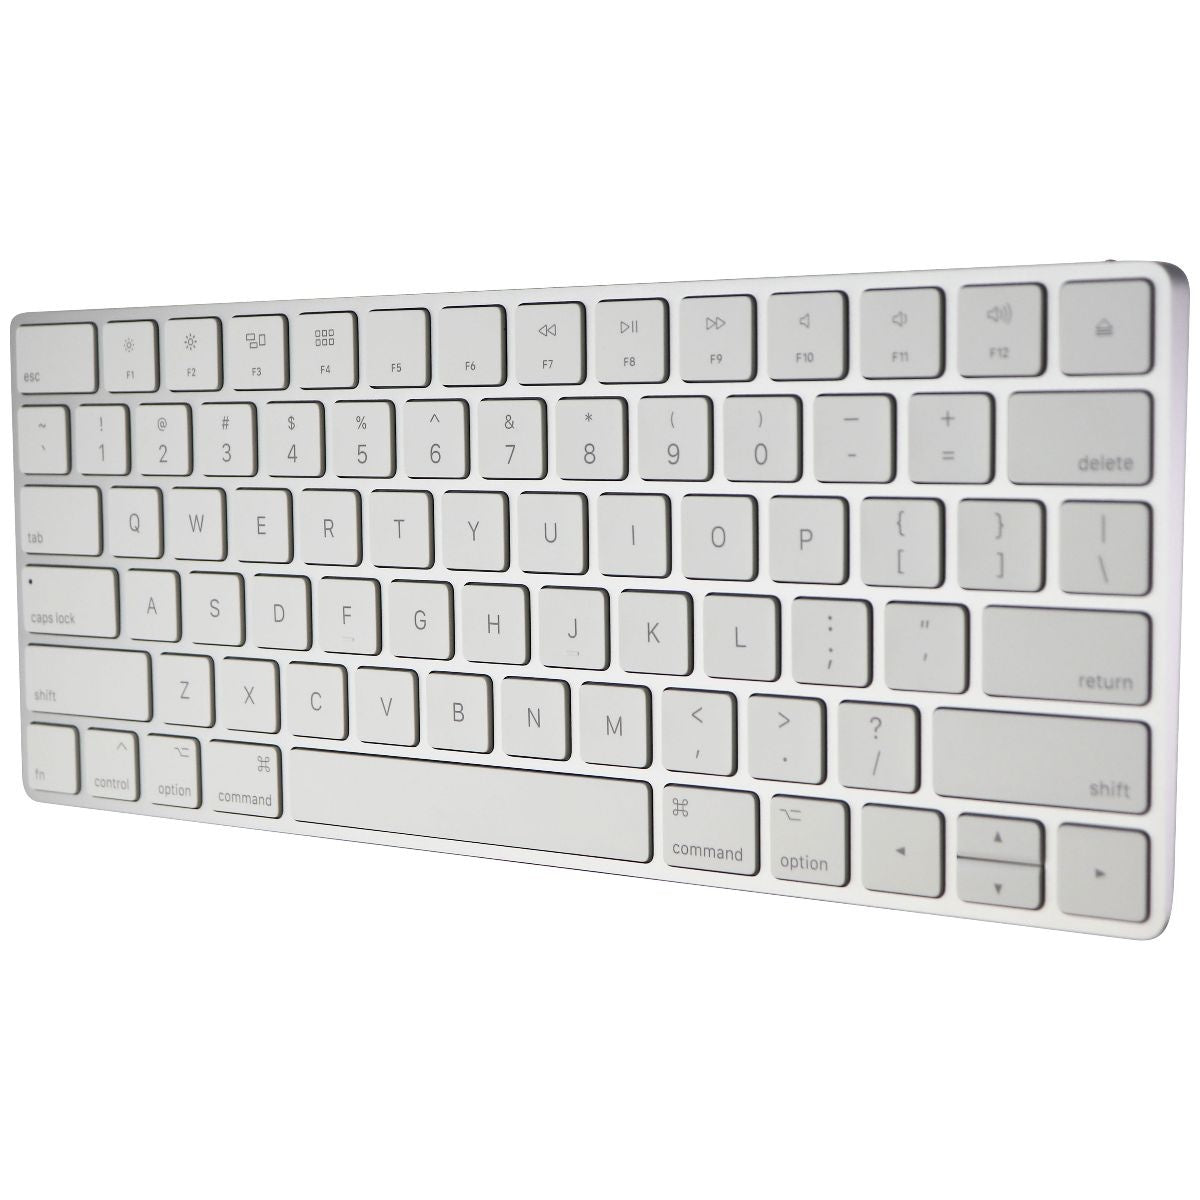 Apple Magic Wireless Keyboard (MLA22LL/A) A1644 - Silver/White Keyboards/Mice - Keyboards & Keypads Apple    - Simple Cell Bulk Wholesale Pricing - USA Seller